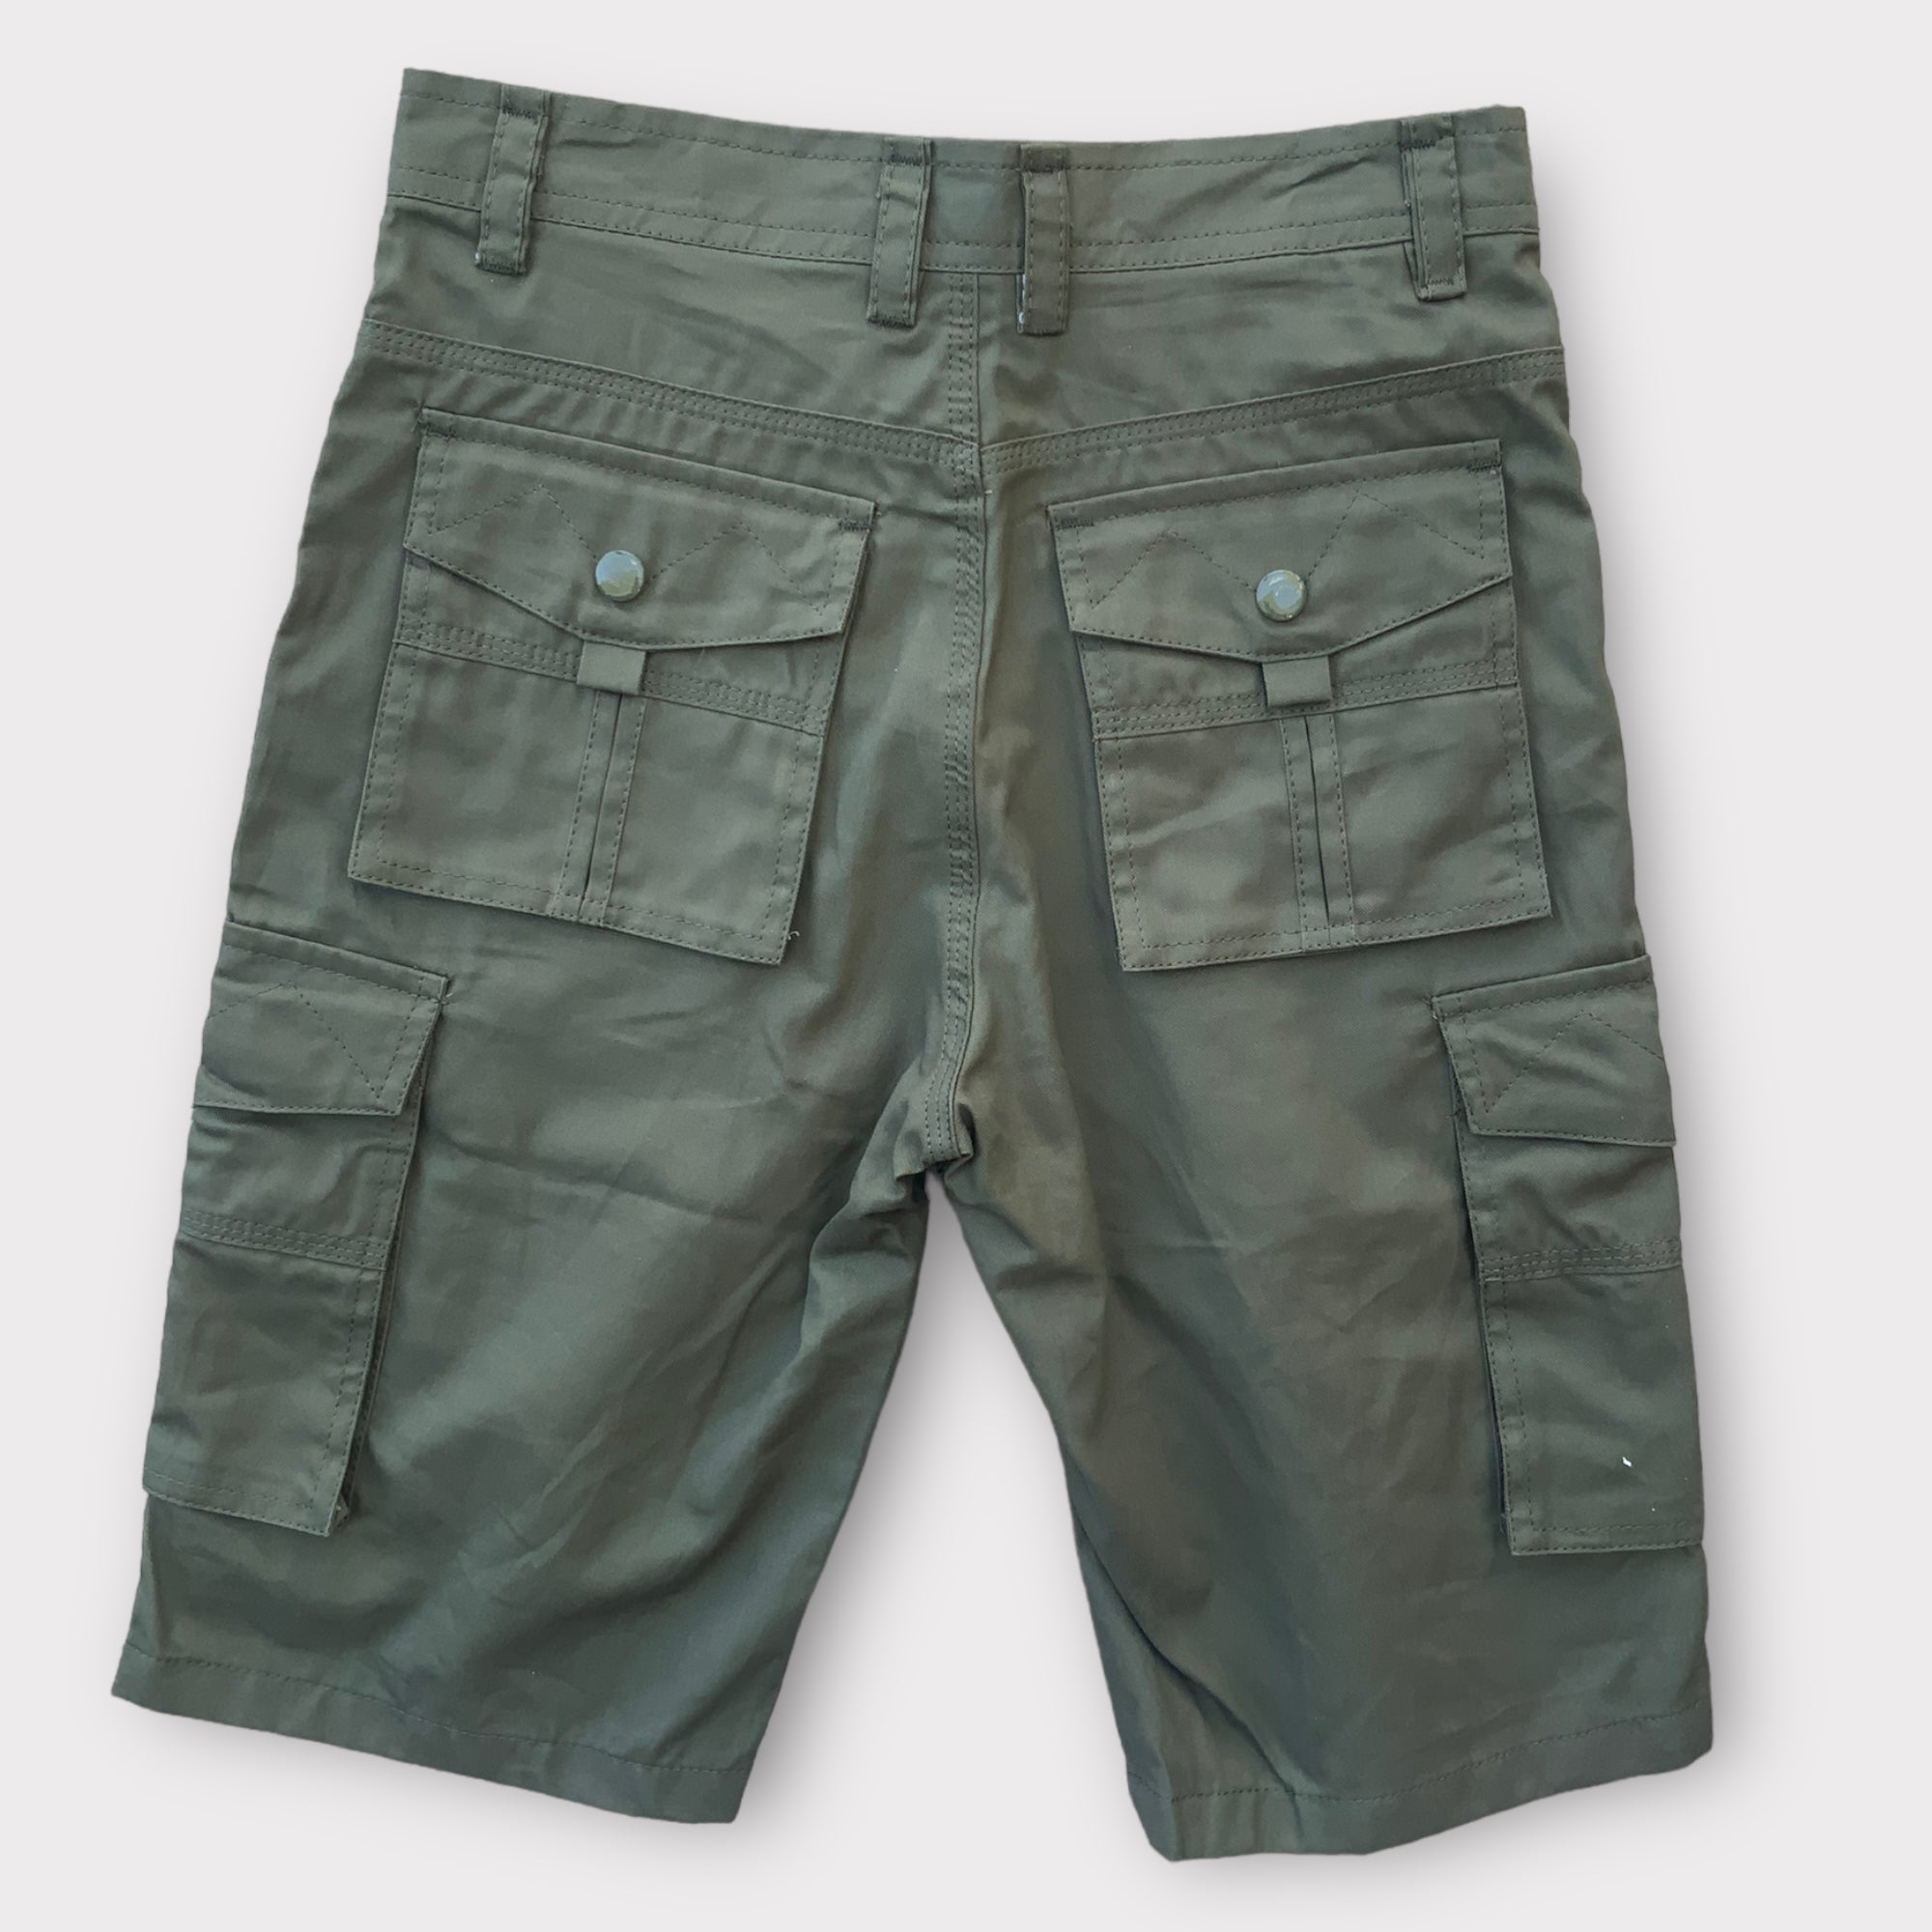 Brand New Mens 6 Pocket Cargo Shorts - Army Green